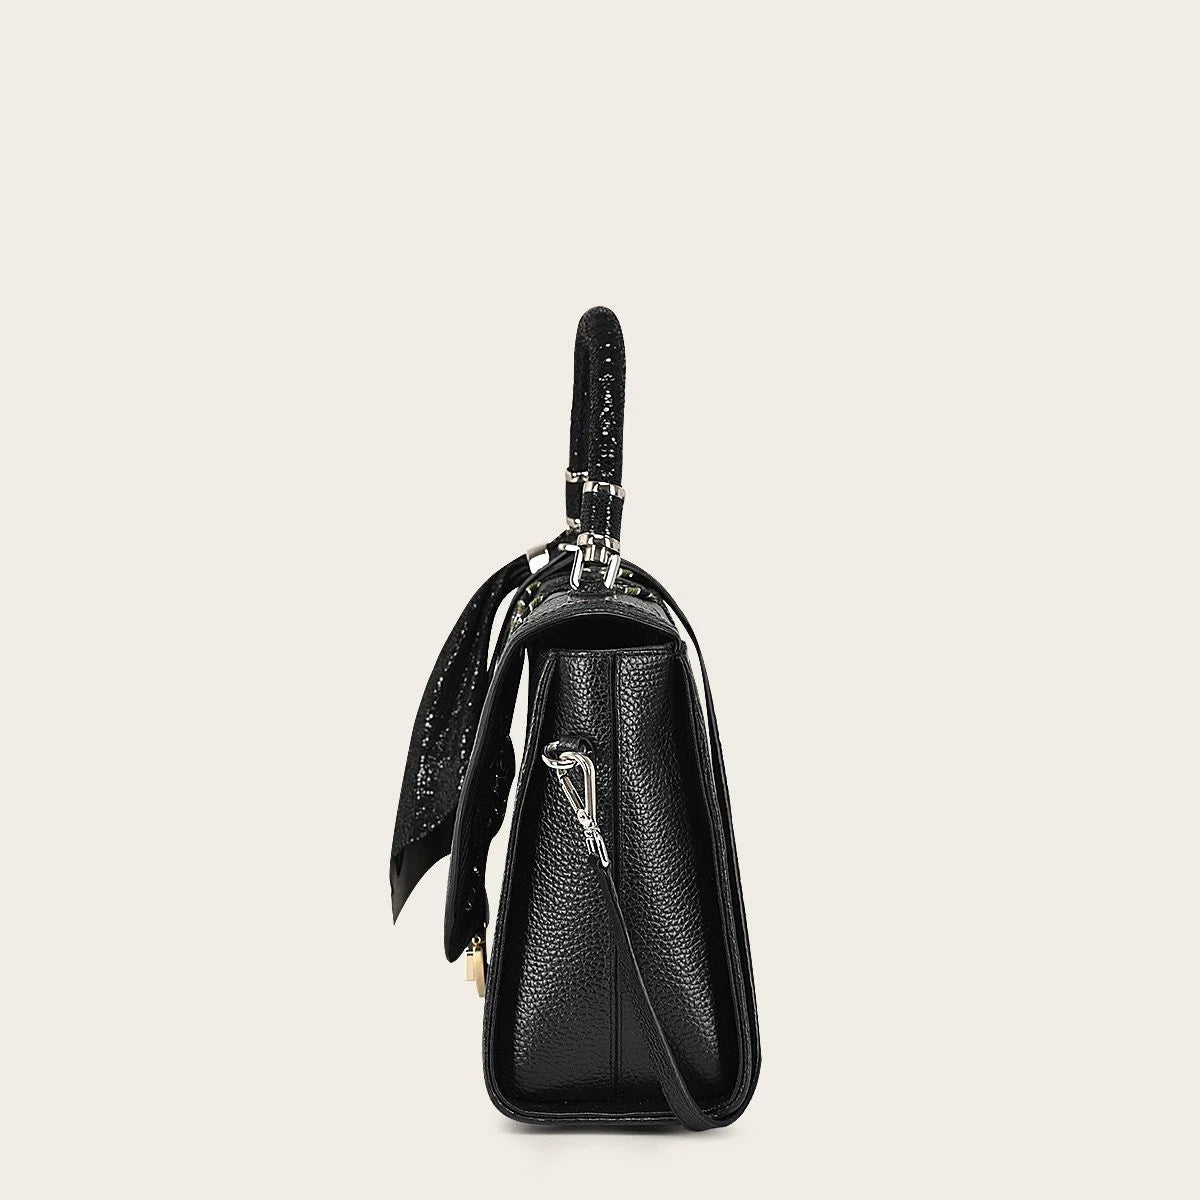 Printed black leather satchel bag